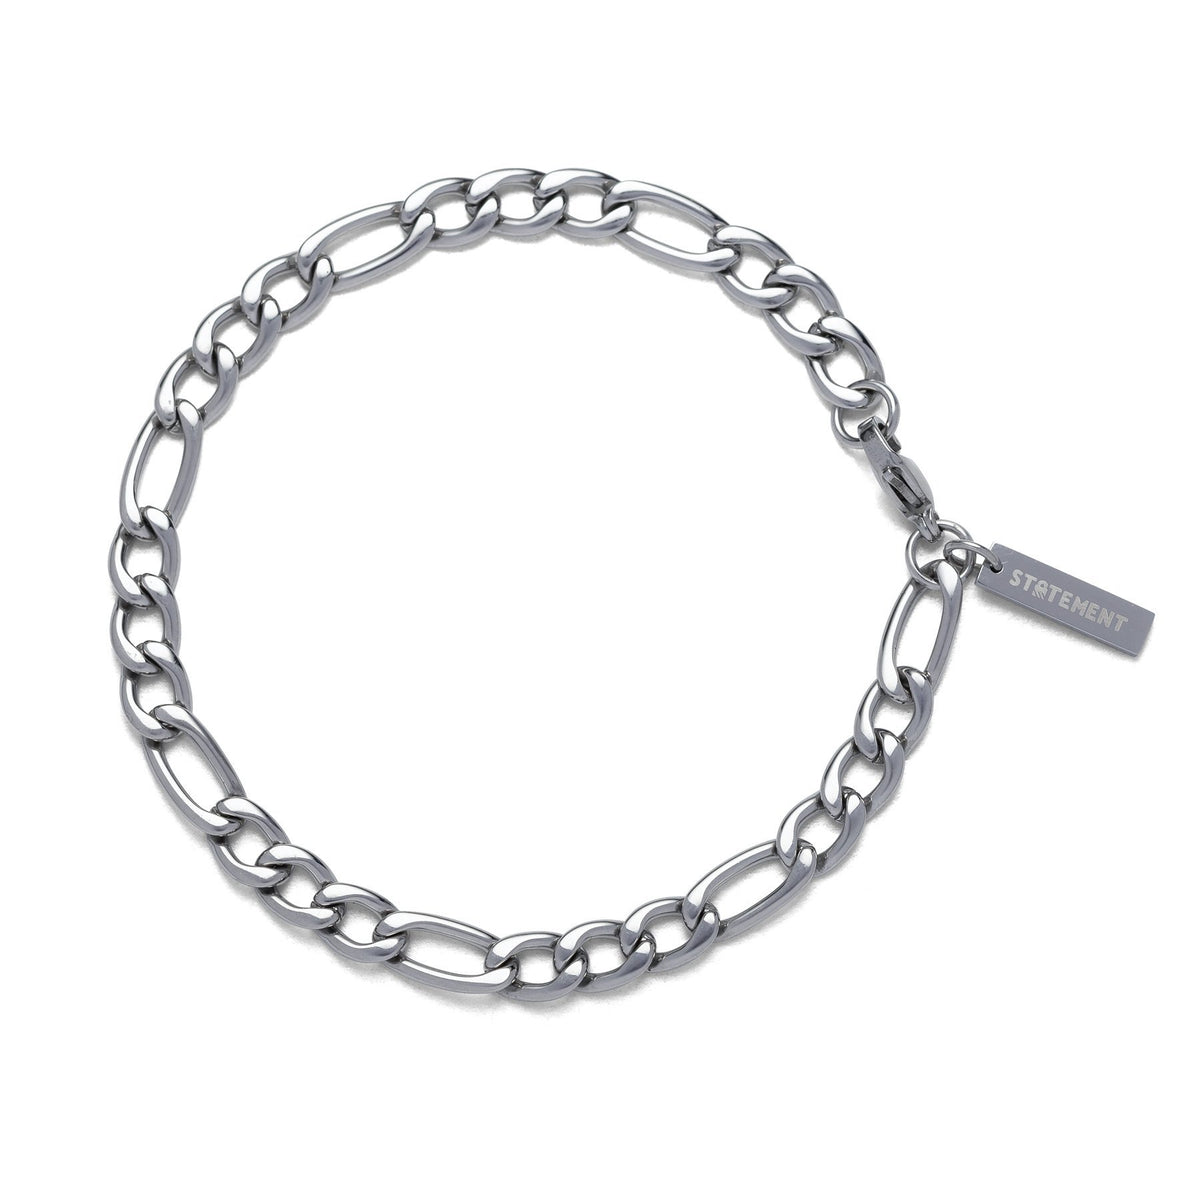 Converge #008 // Bracelet Accessories STATEMENT 